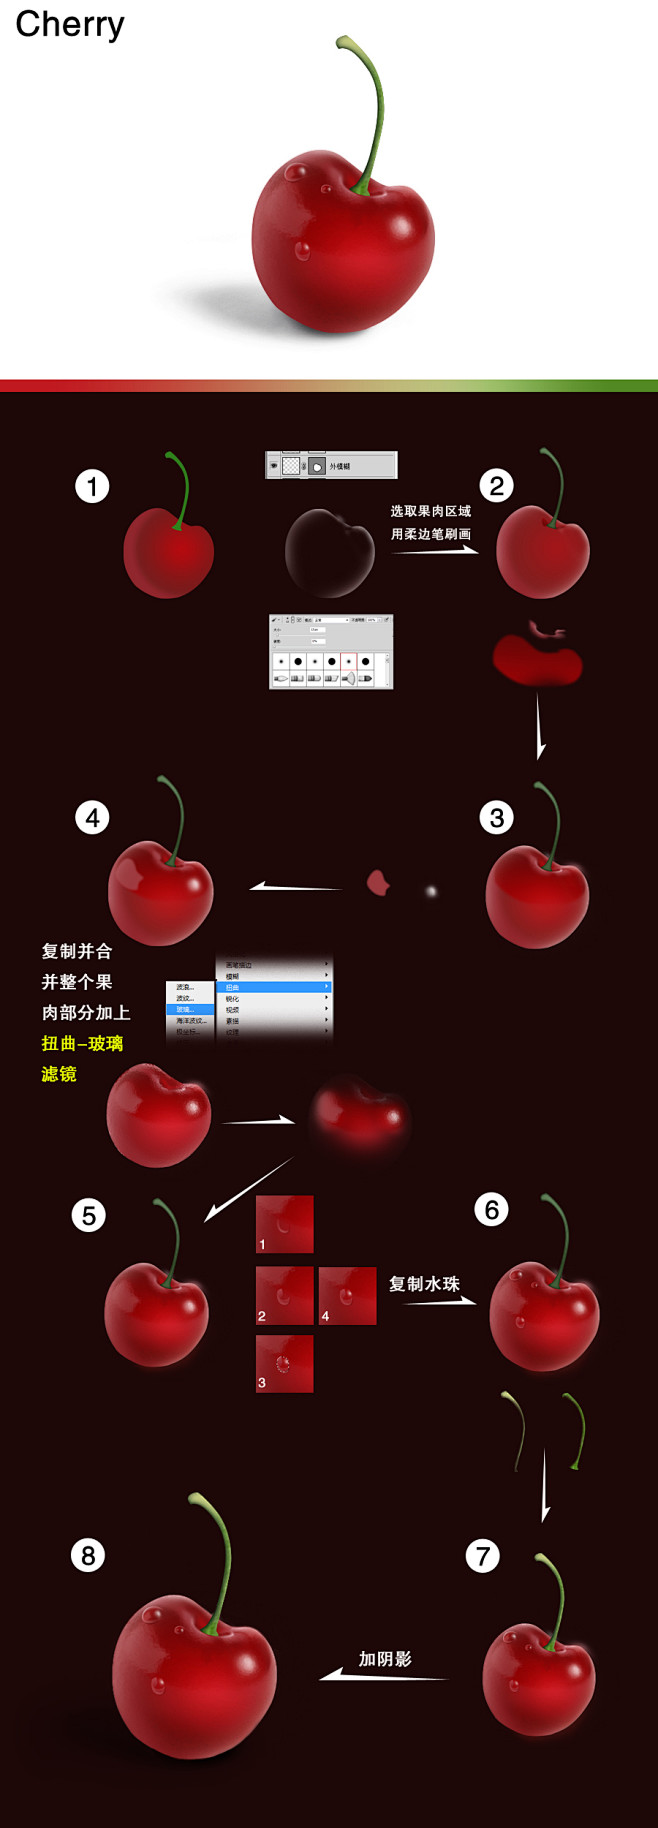 【教程】樱桃icon步骤分解 - 图标界...